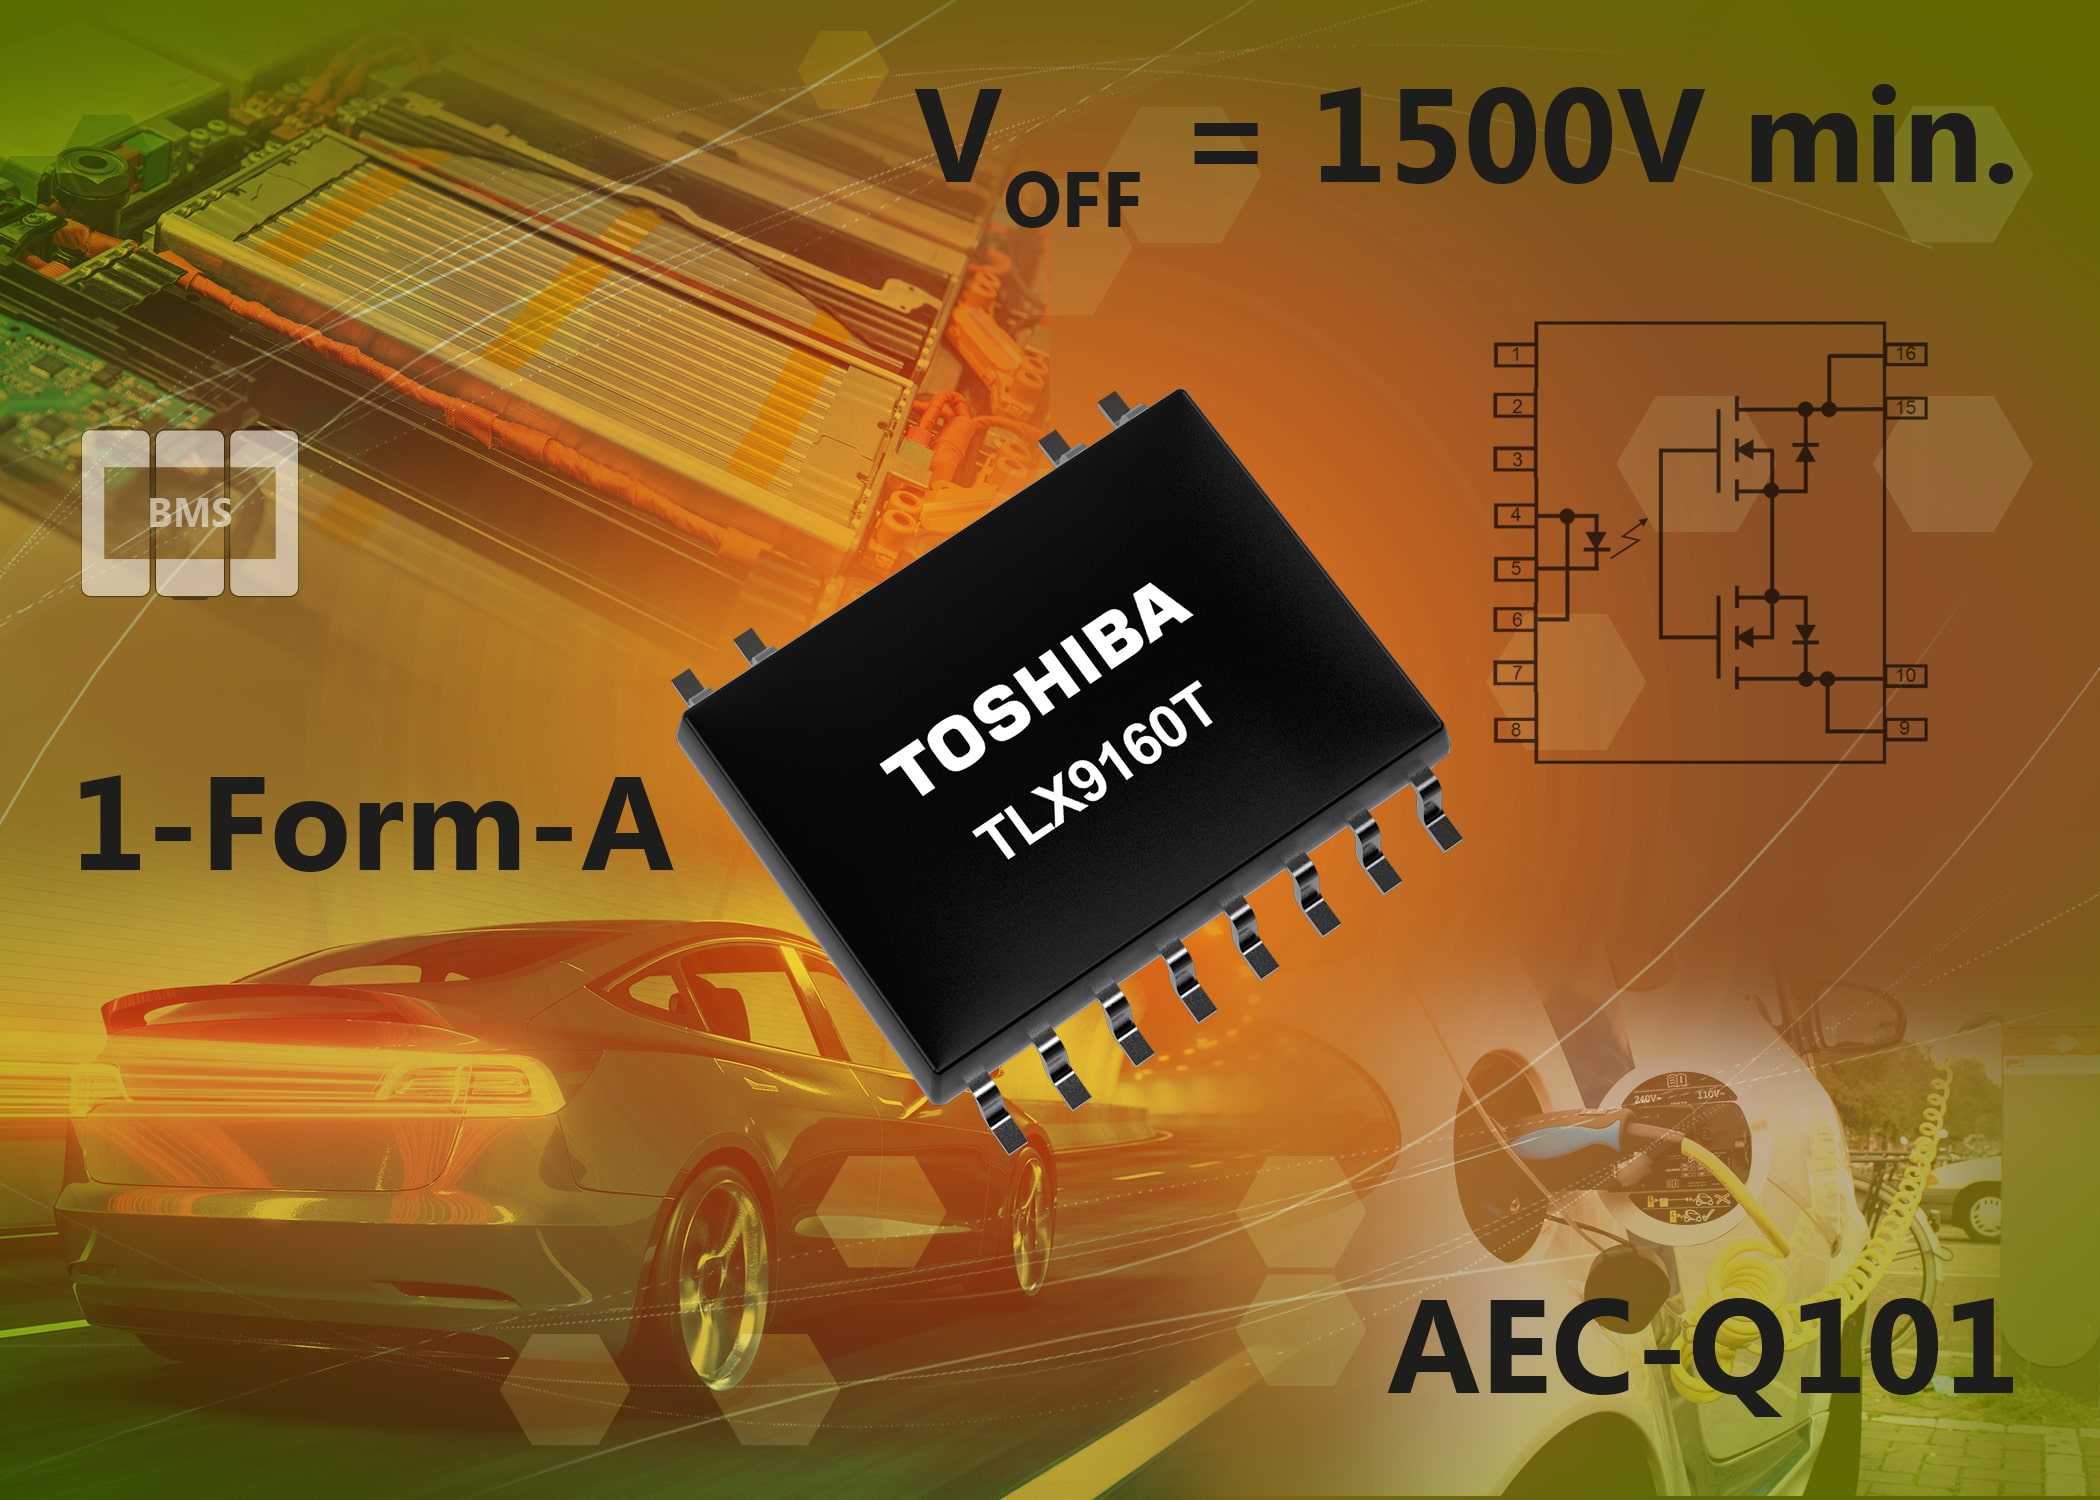 Toshiba release high voltage 1500V automotive photorelay